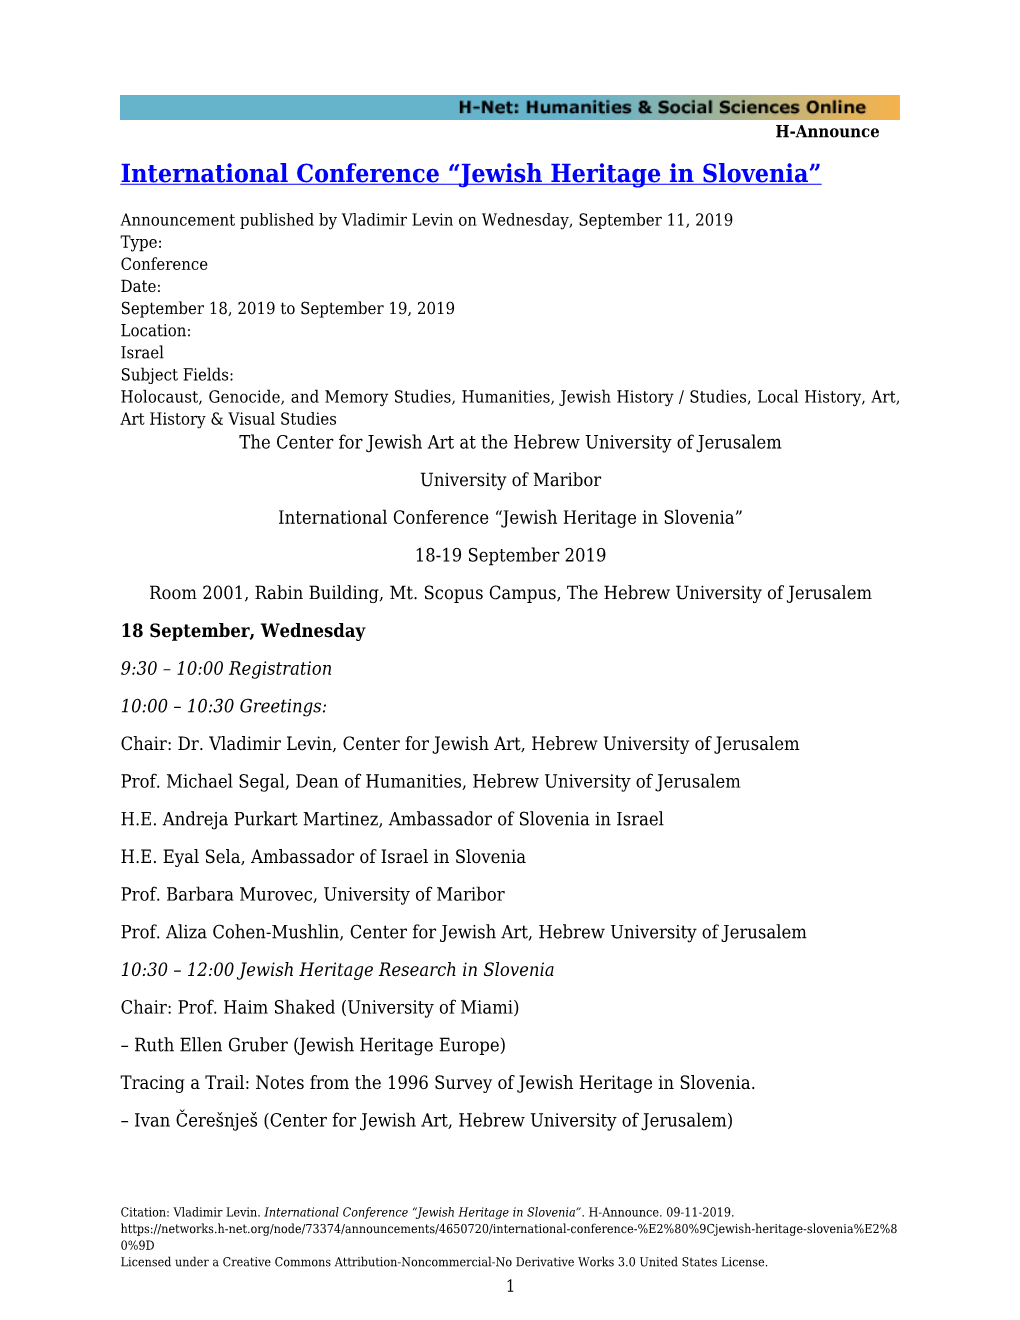 International Conference “Jewish Heritage in Slovenia”